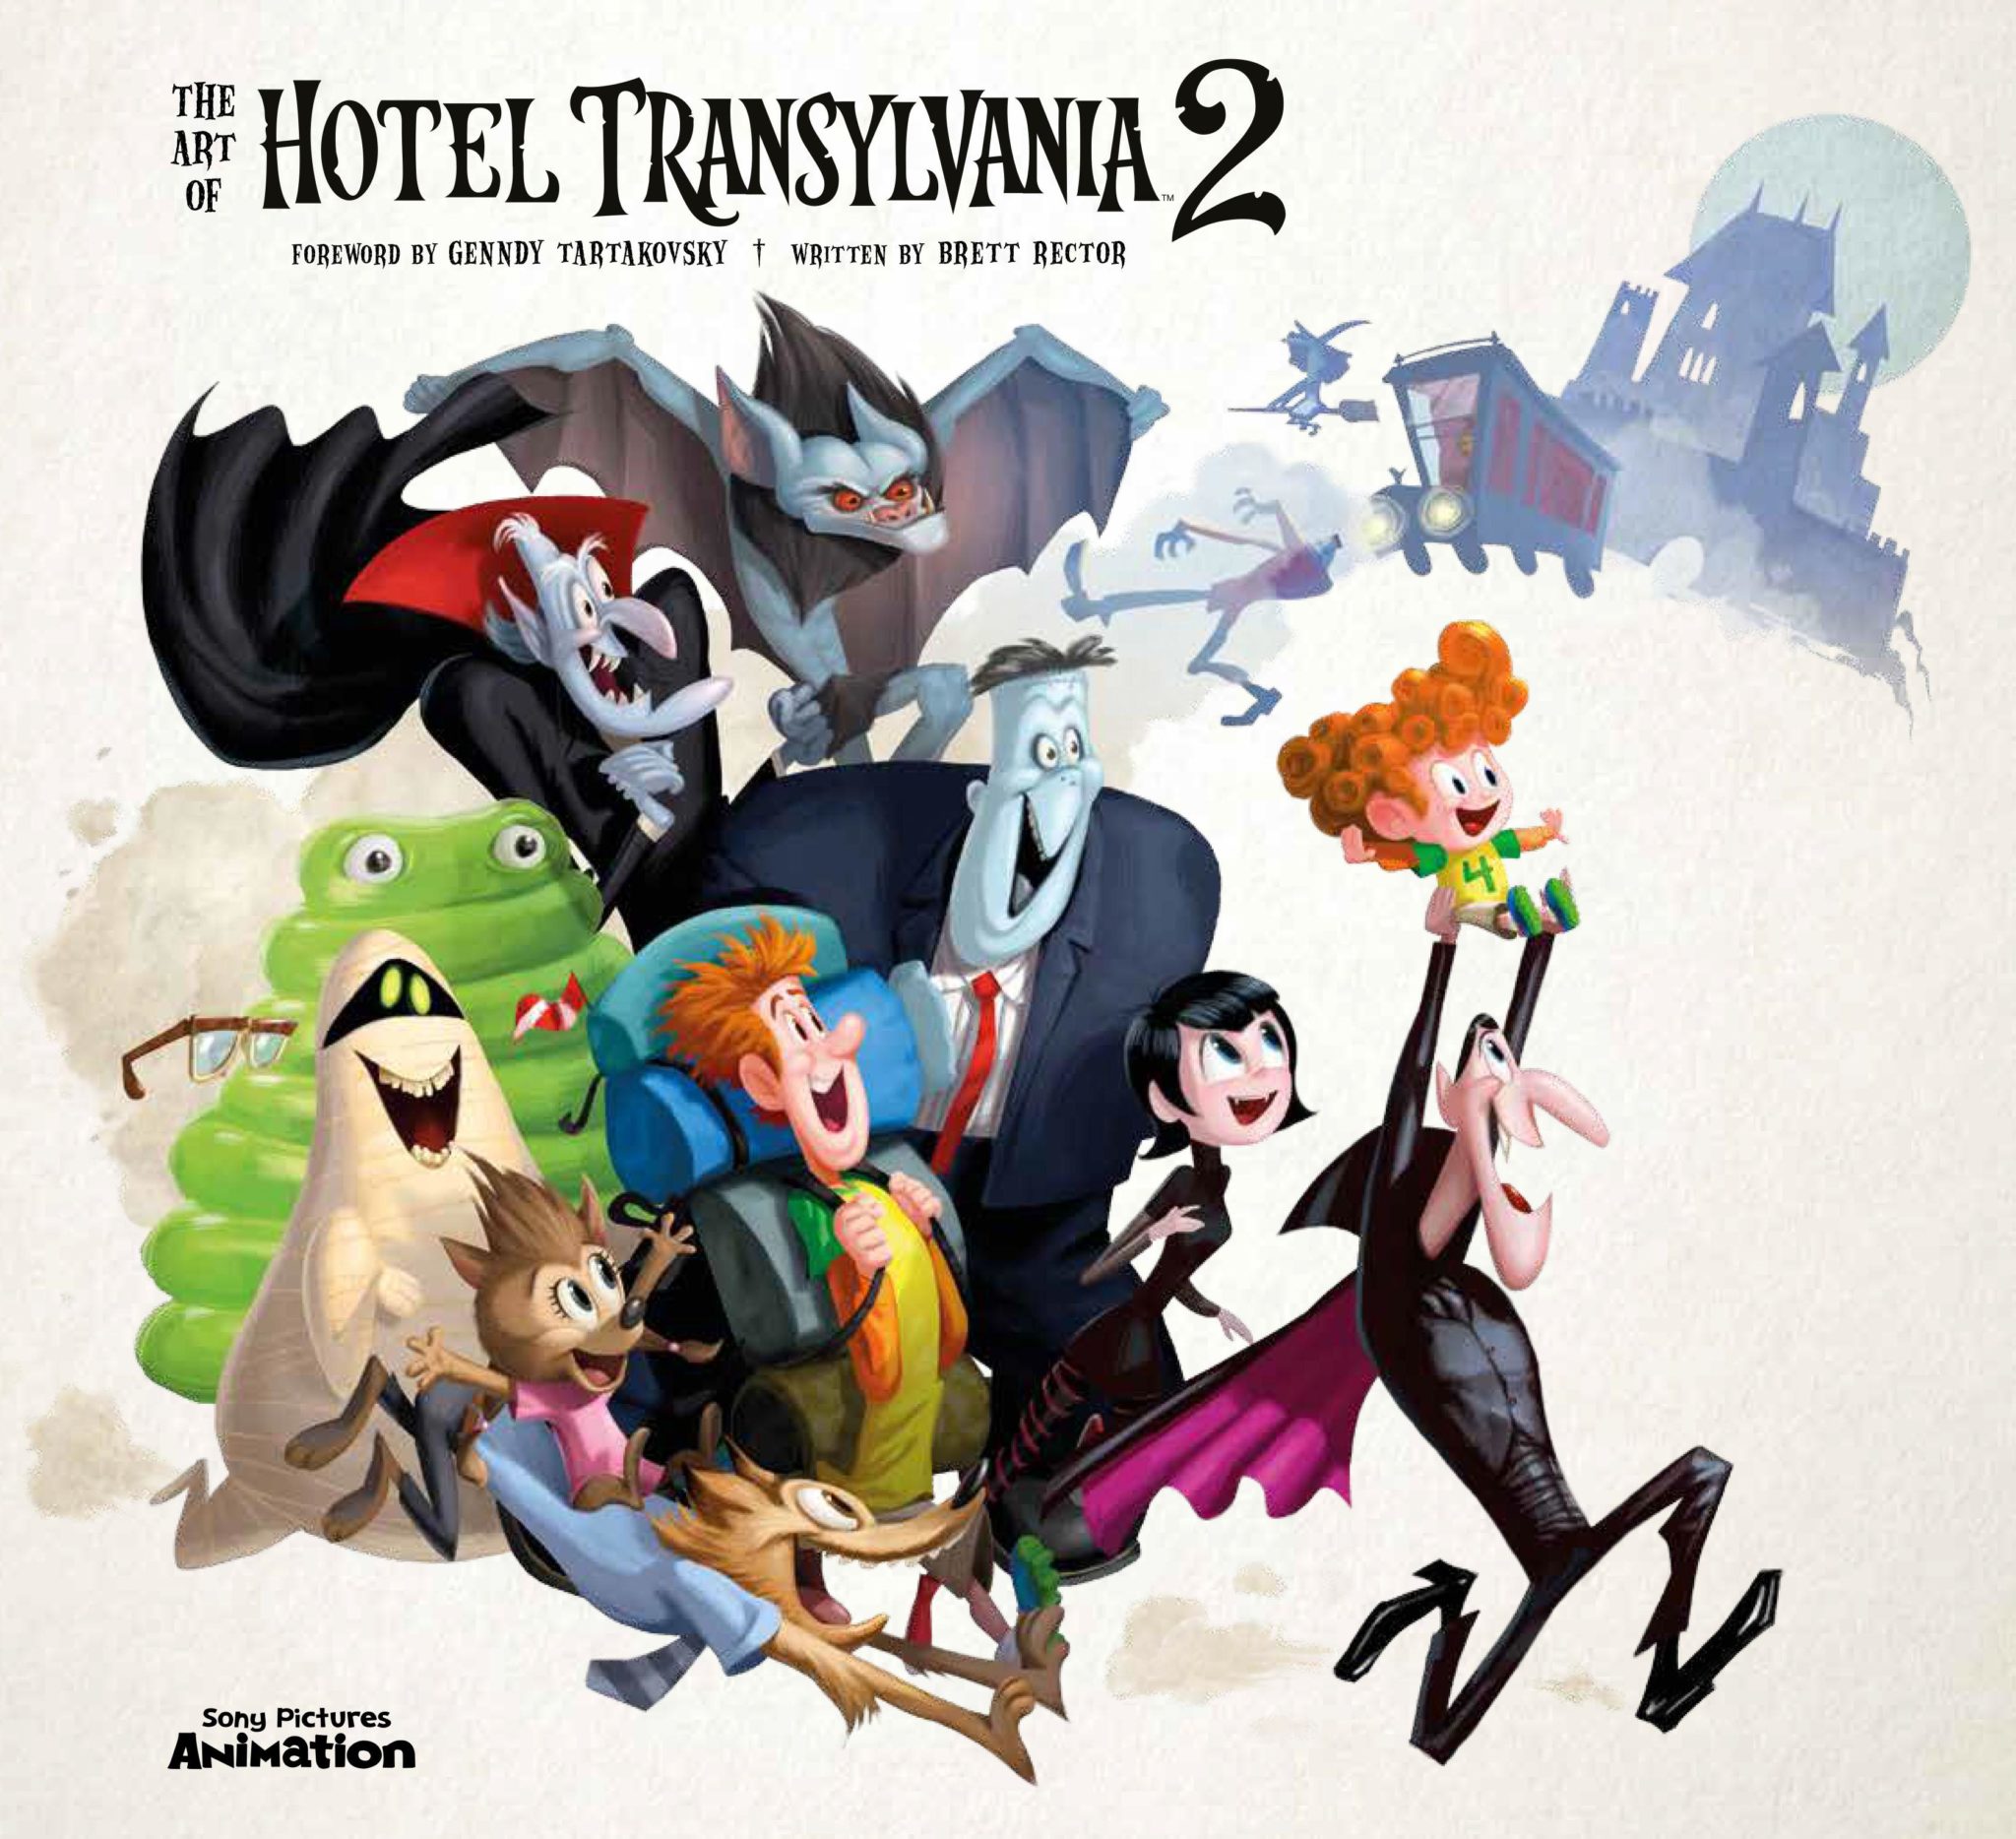 [ART BOOK REVIEW] 'The Art of Hotel Transylvania 2' | Rotoscopers